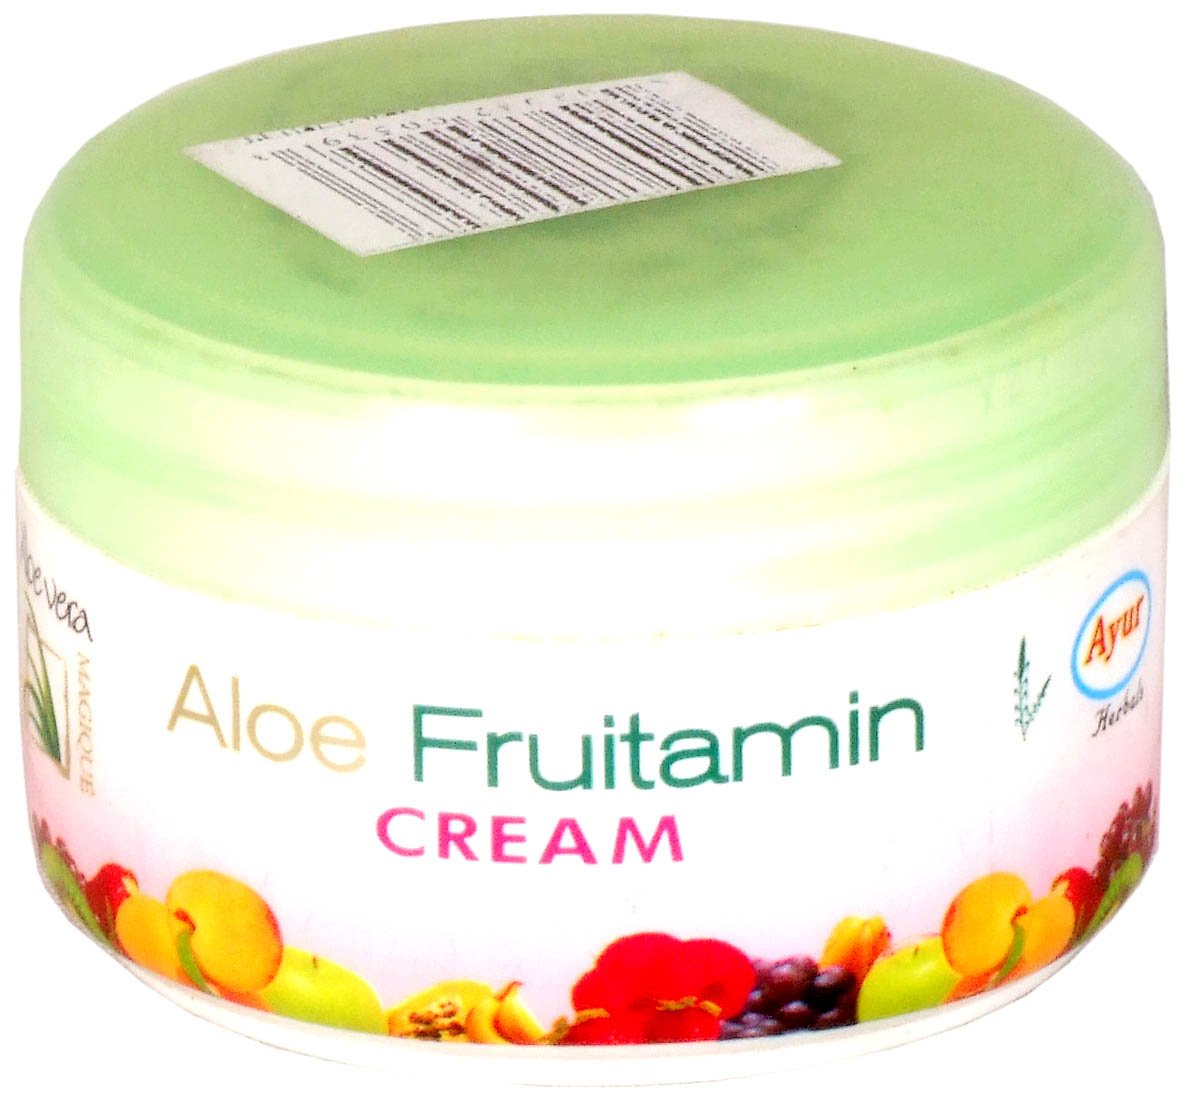 Aloe Fruitamin Cream - book cover